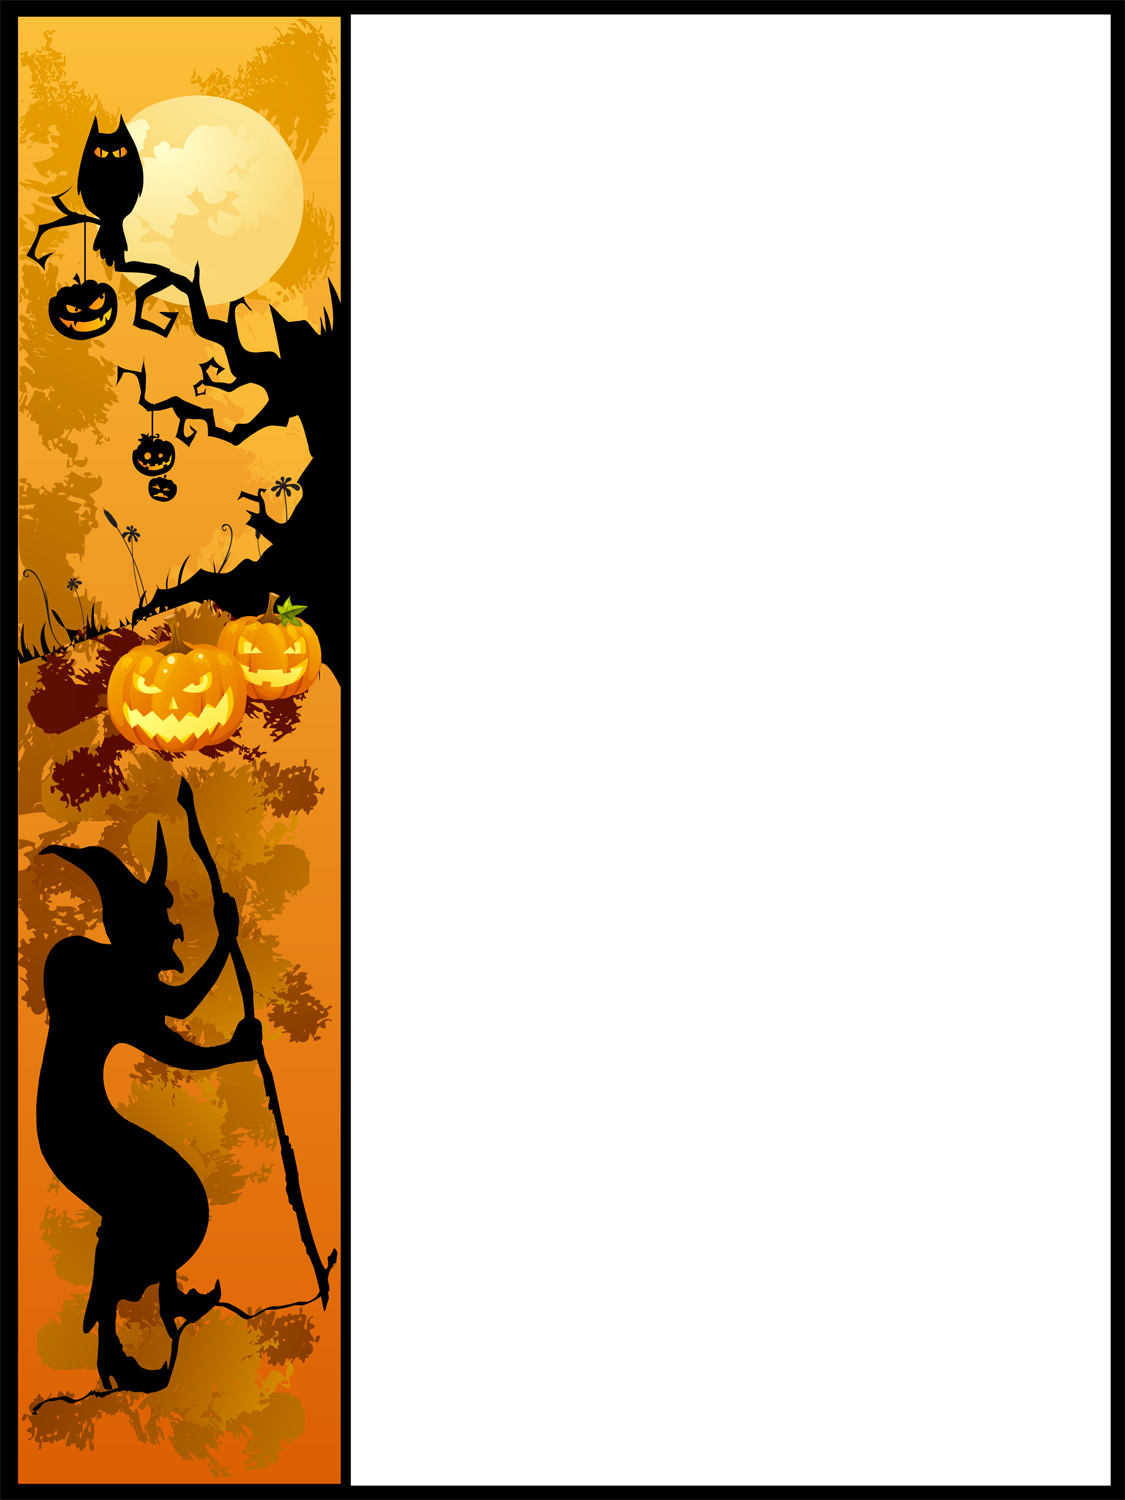 Halloween Pumpkin Border Clip Art   Clipart Panda   Free Clipart    